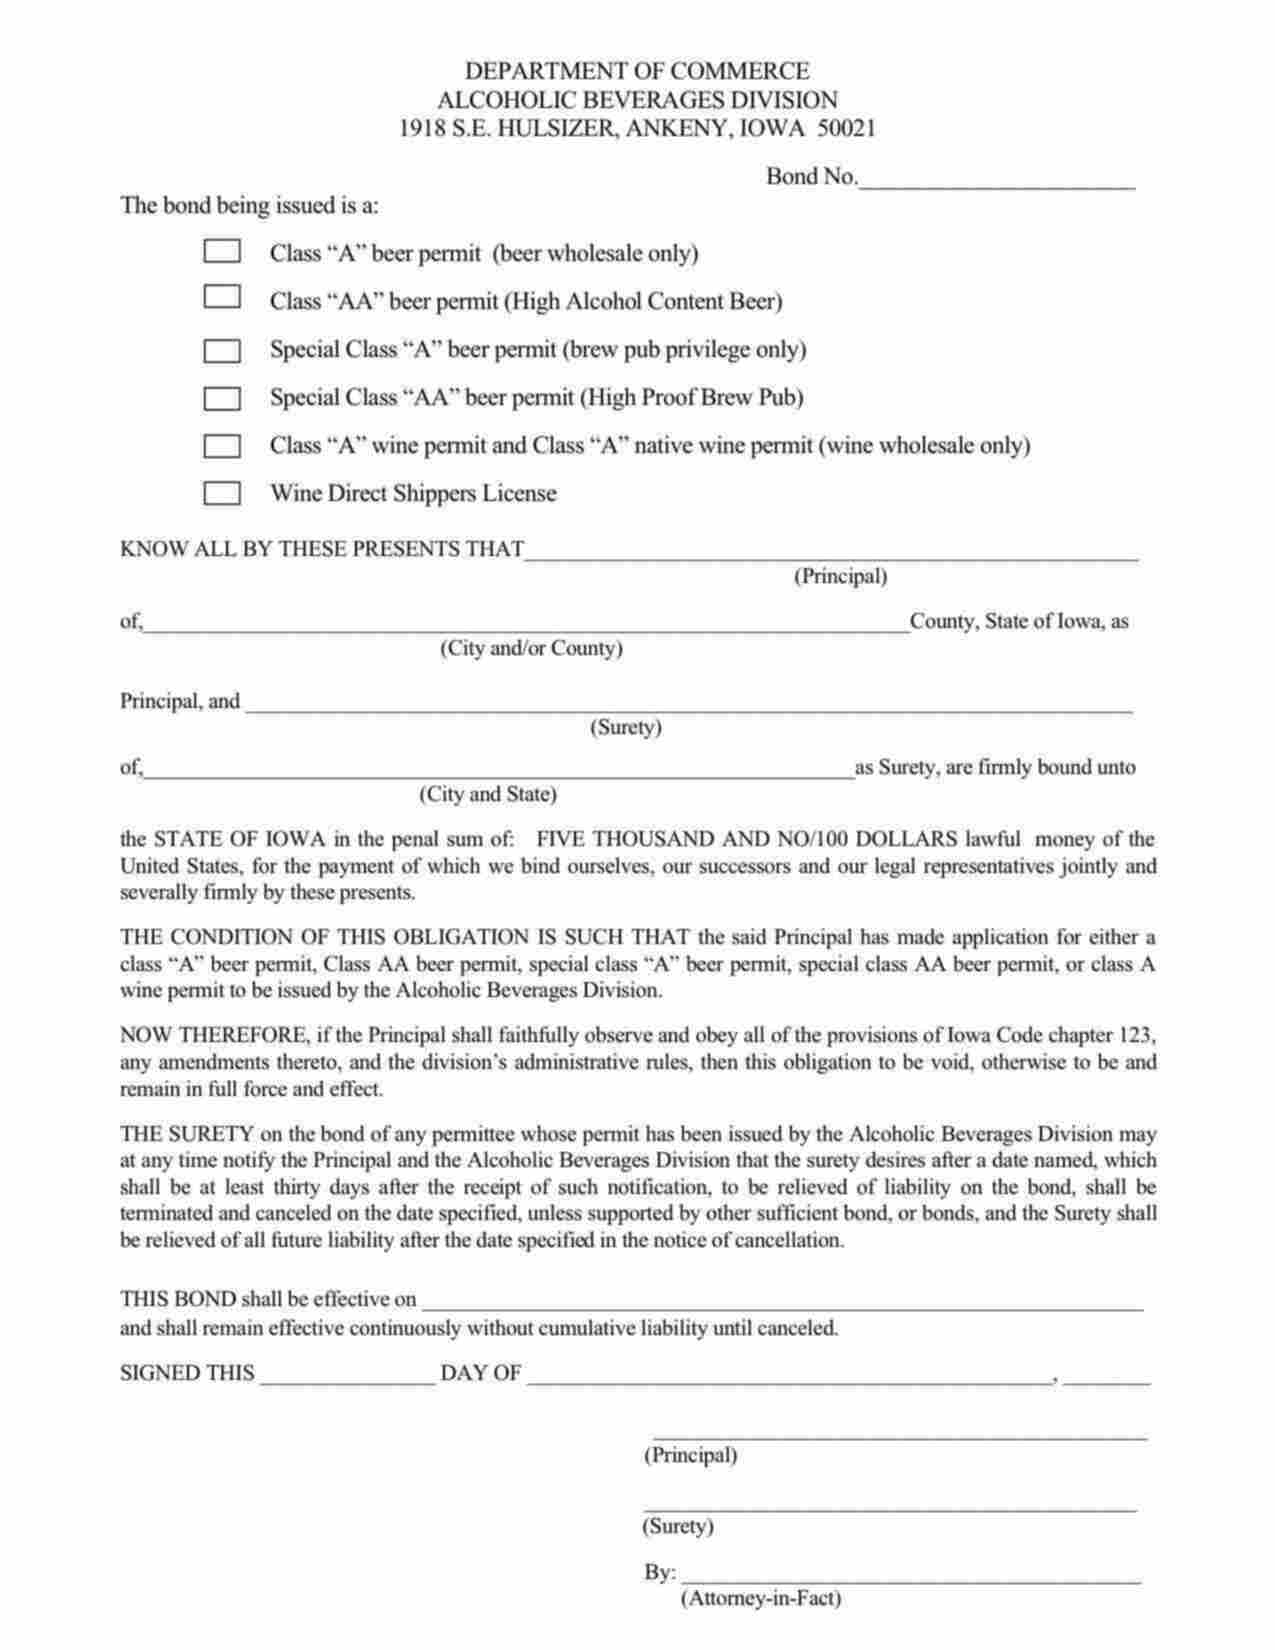 Iowa Special Class A Beer Permit (Brew Pub Privilege Only) Bond Form